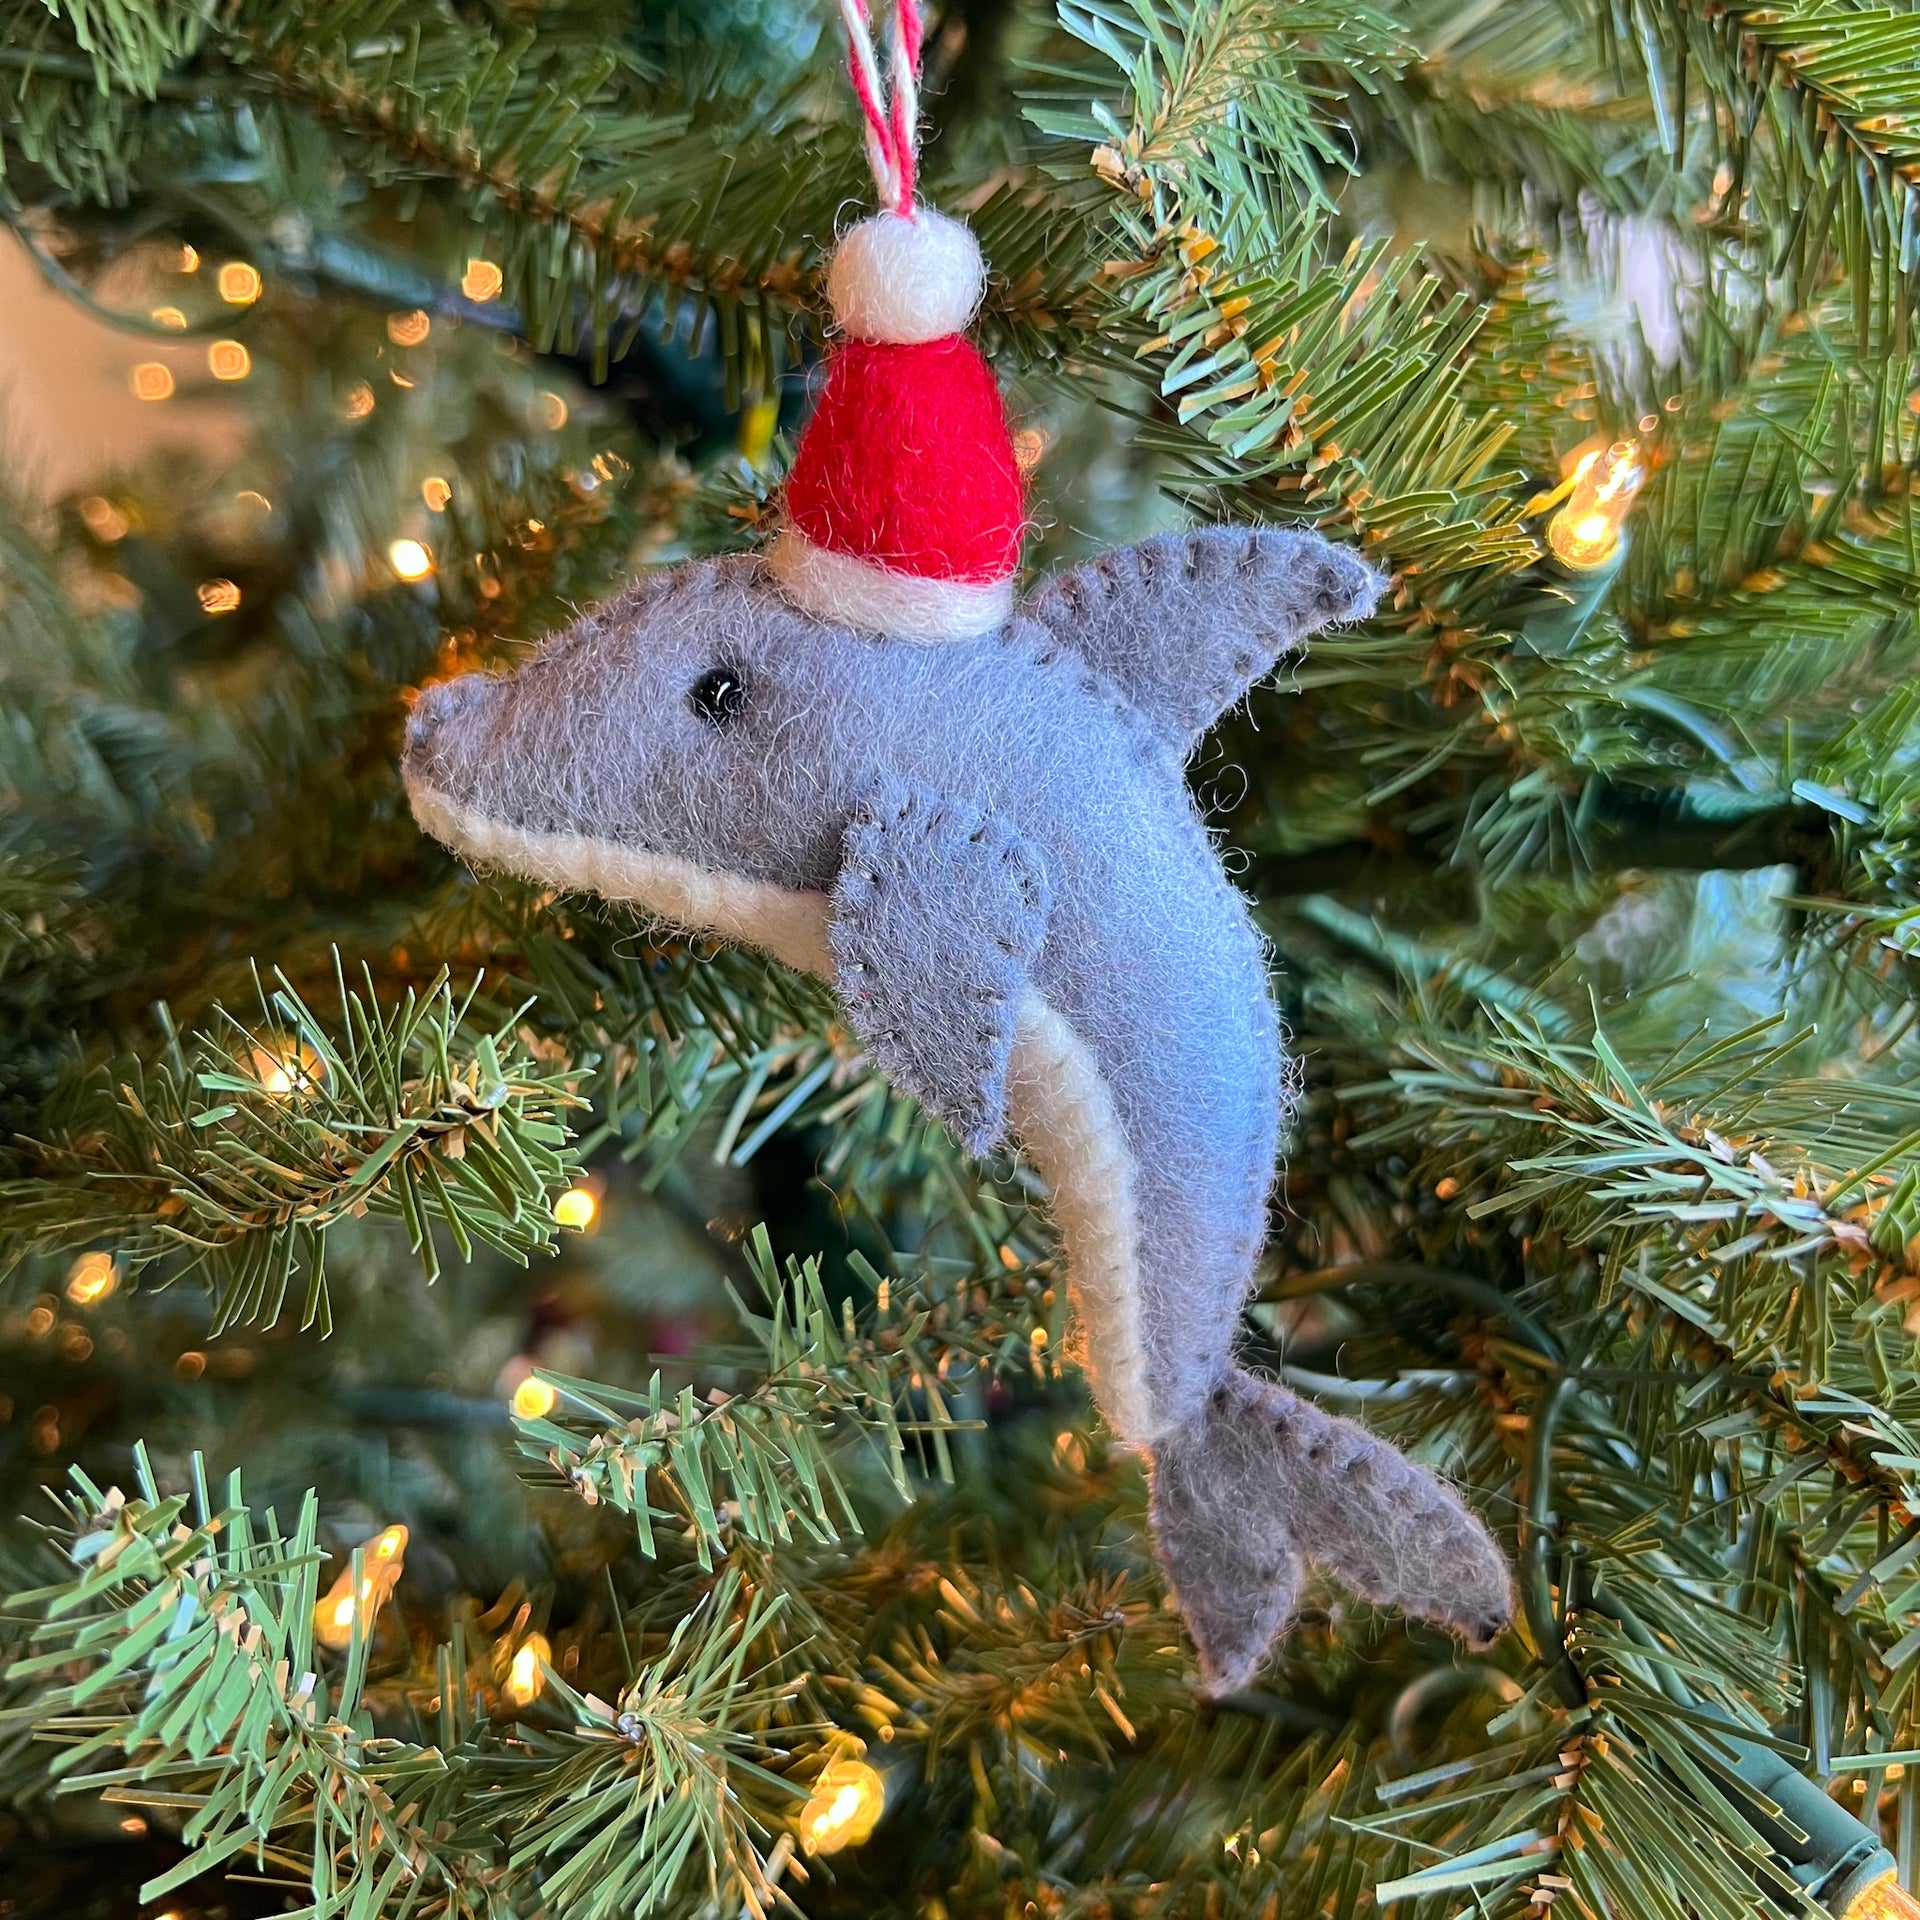 Felt dolphin santa ornament hanging on Christmas tree